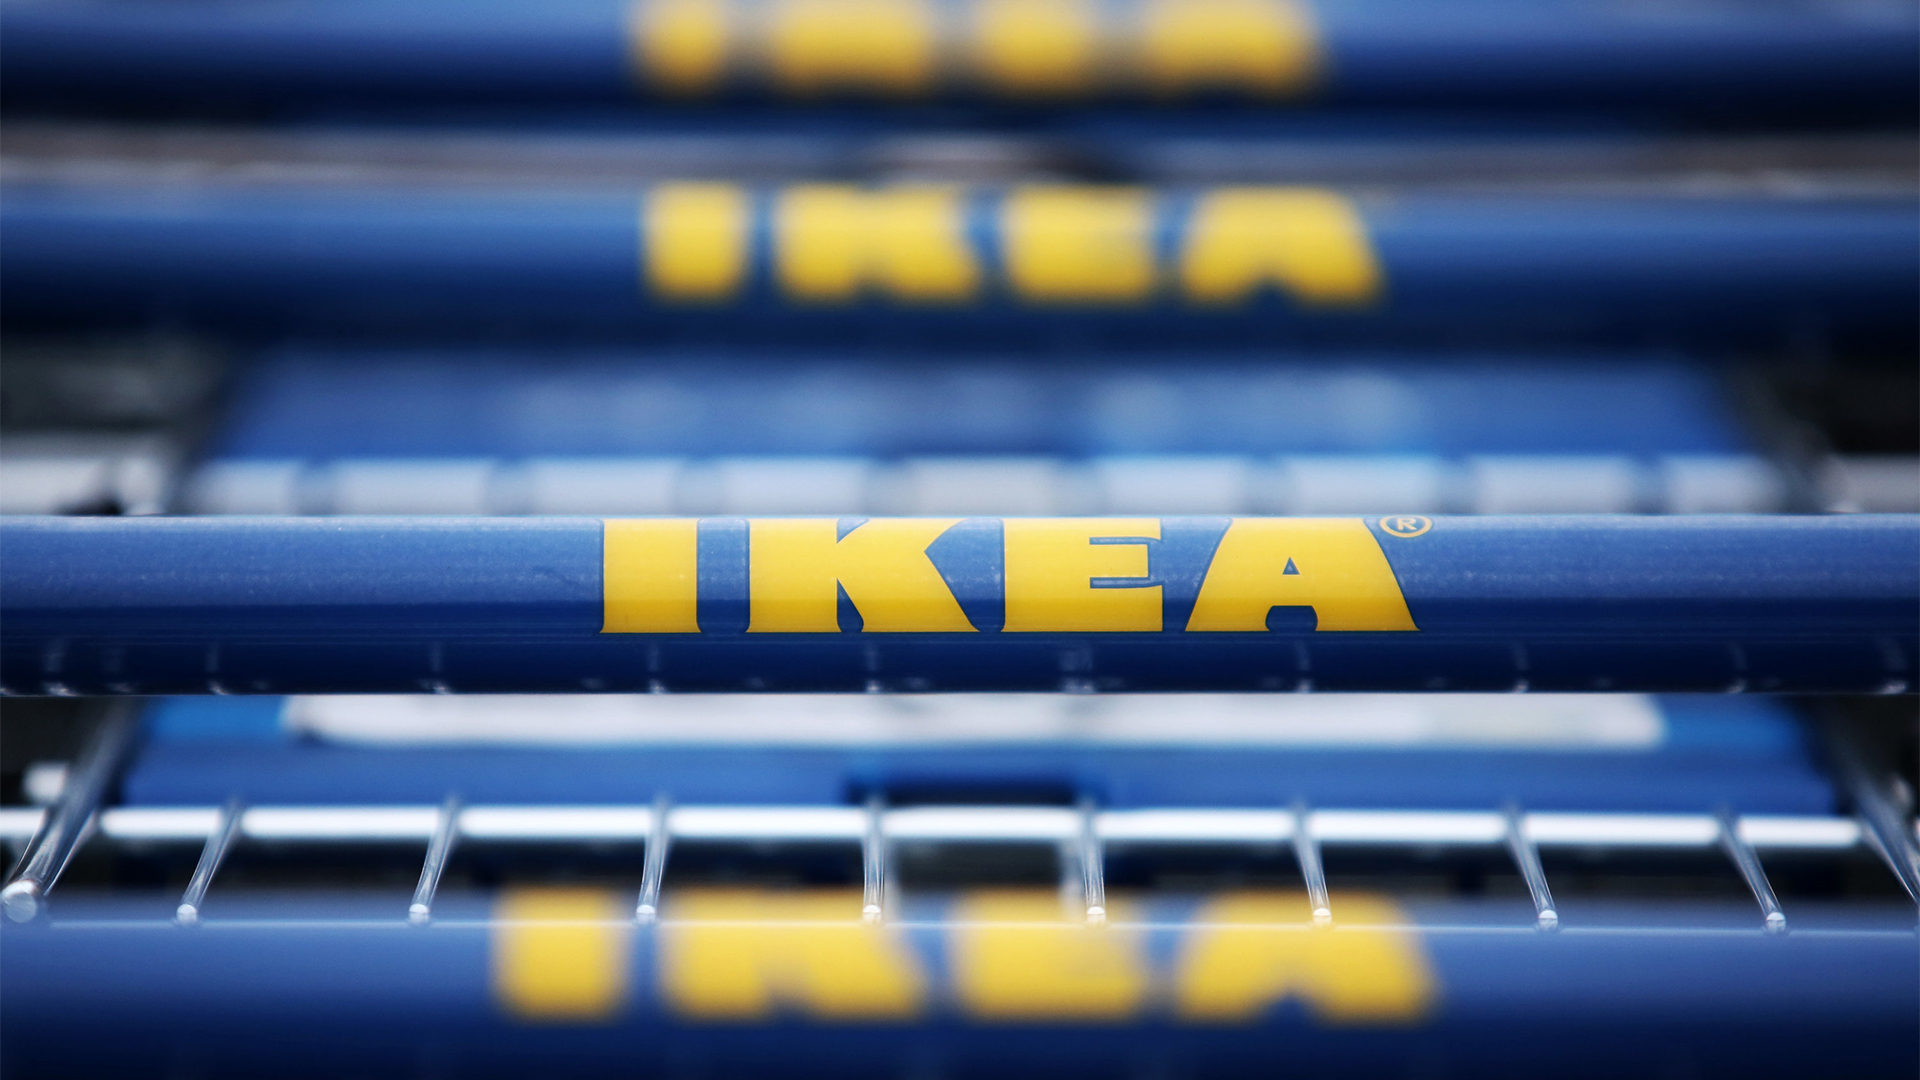 Ikea Einkaufswagen mit Ikea Logo | dpa